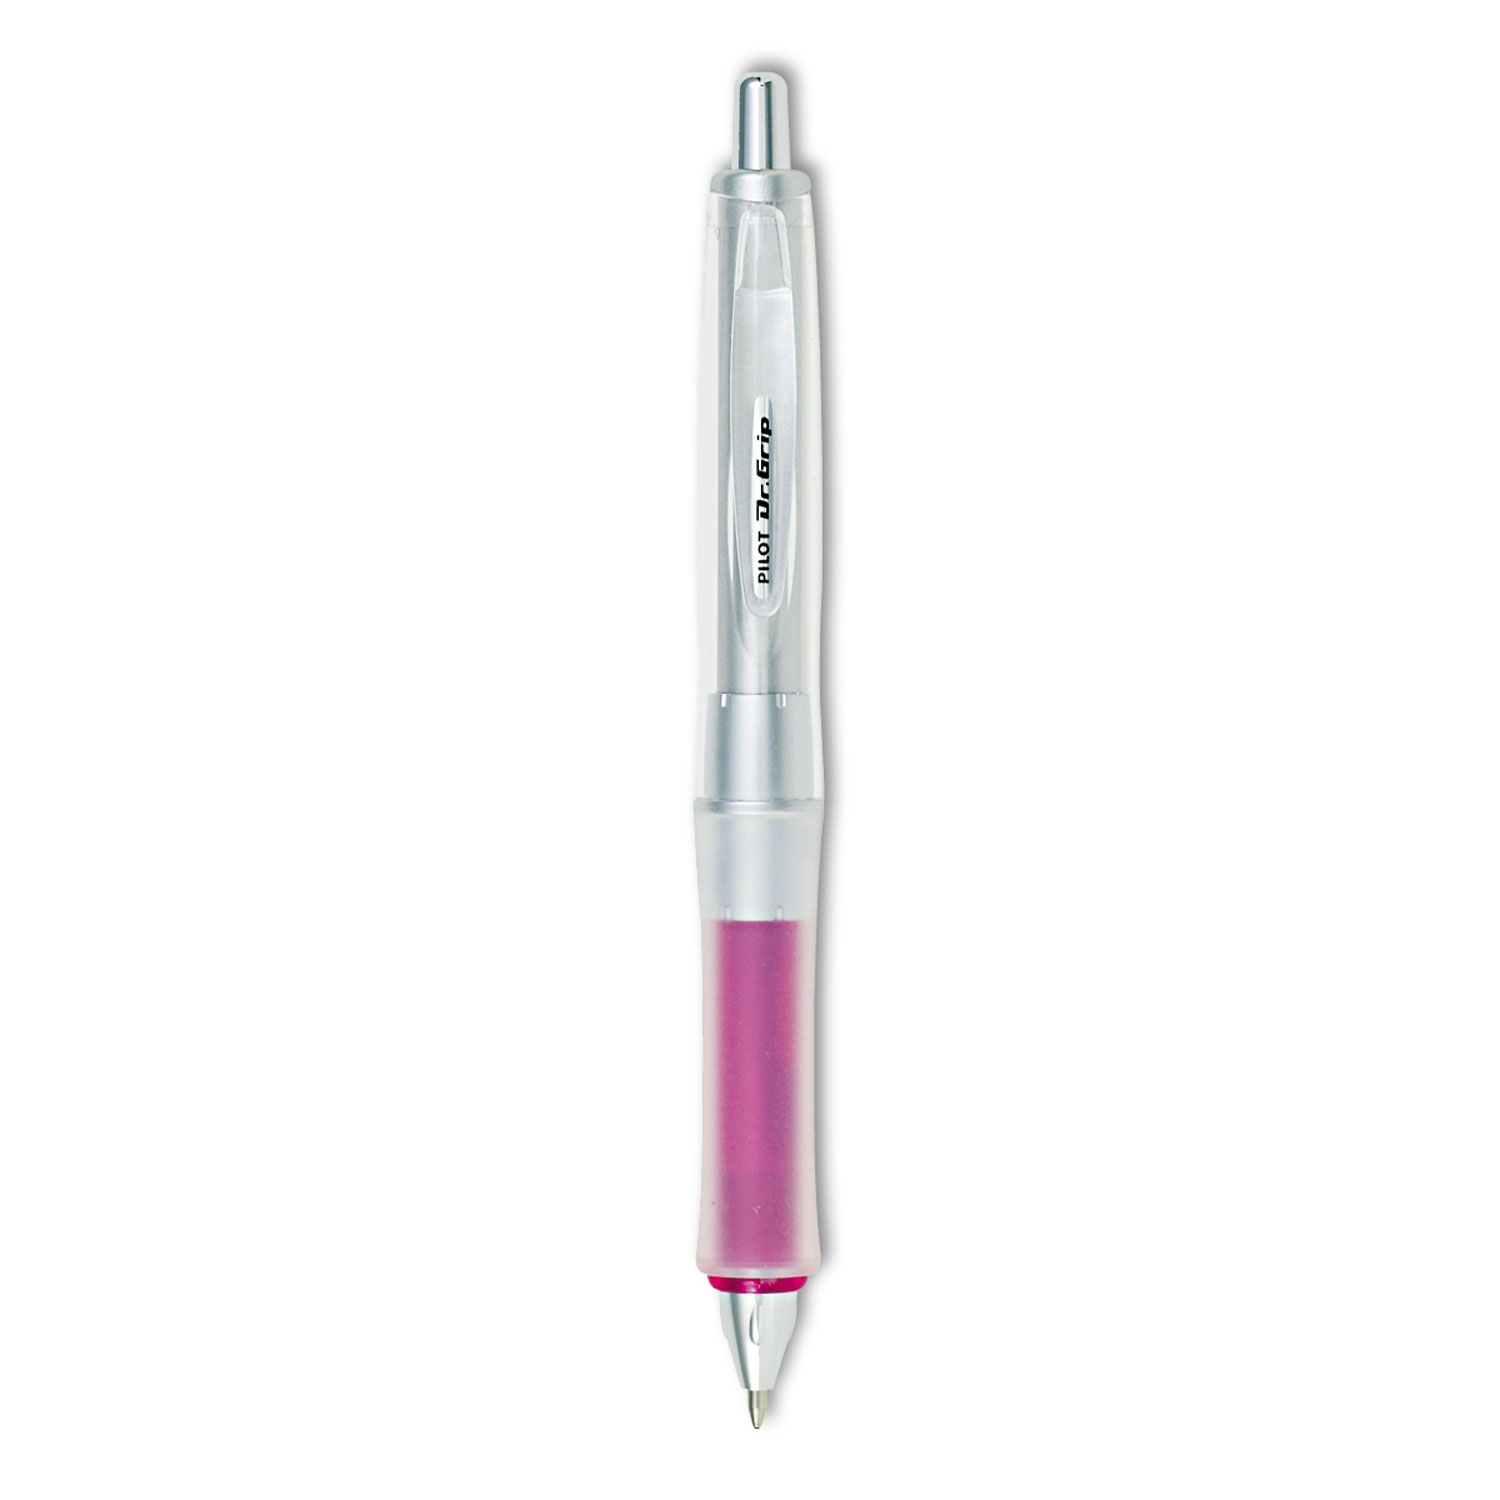  Pilot 36182 Dr. Grip Center of Gravity Retractable Ballpoint Pen, 1mm, Black Ink, Silver/Pink Barrel (PIL36182) 